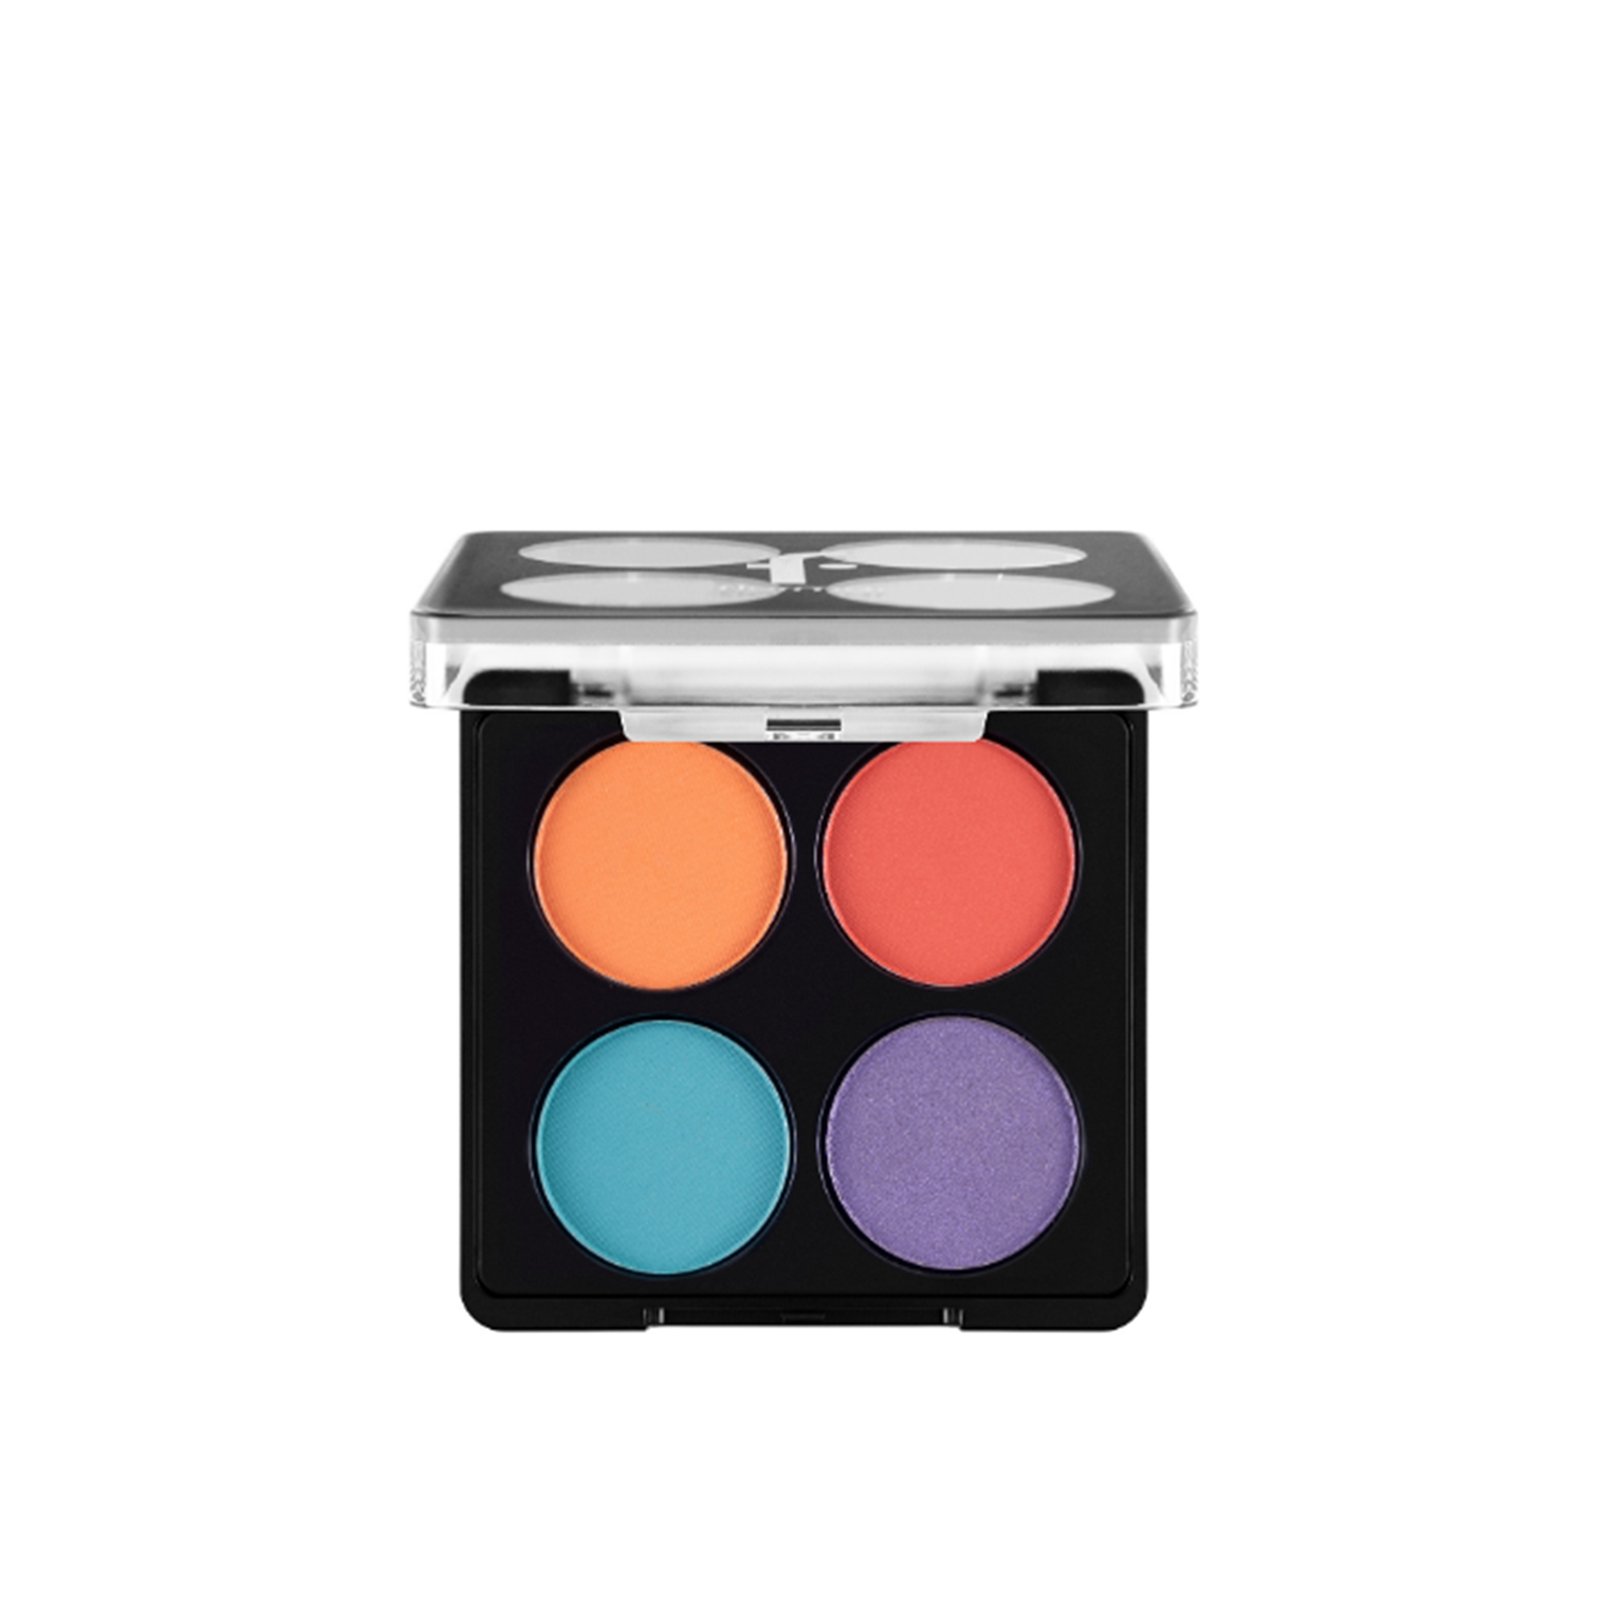 Flormar Color Eyeshadow Palette 006 Tropical Glam 6g (0.21 oz)